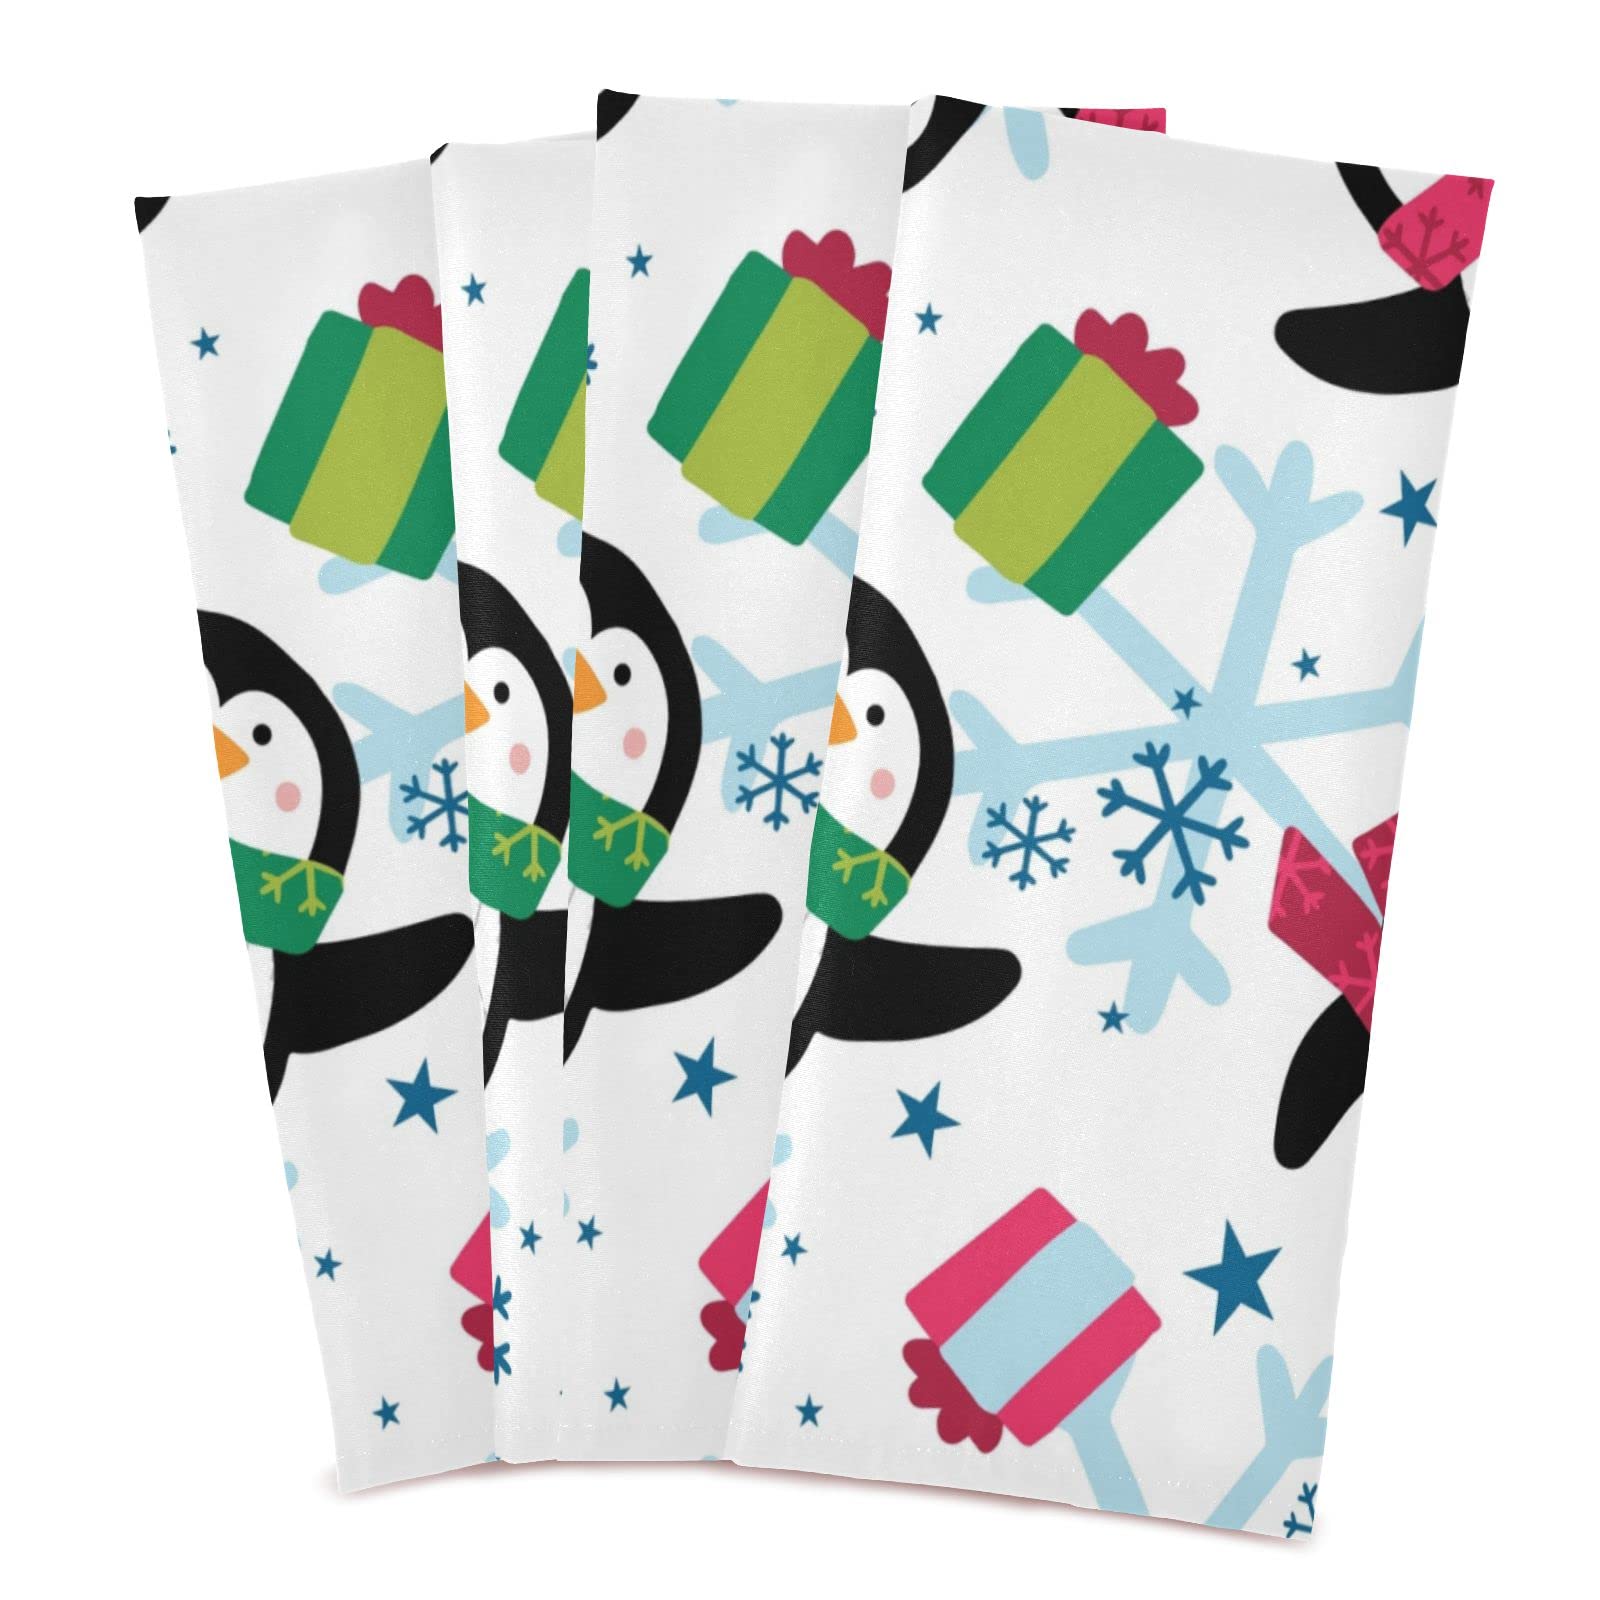 Qilmy Christmas Penguin Kitchen Dish Towel Set of 1, Soft Absorbent Dish Cloths Decorative Tea Bar Drying Towels, 18 x 28 Inch